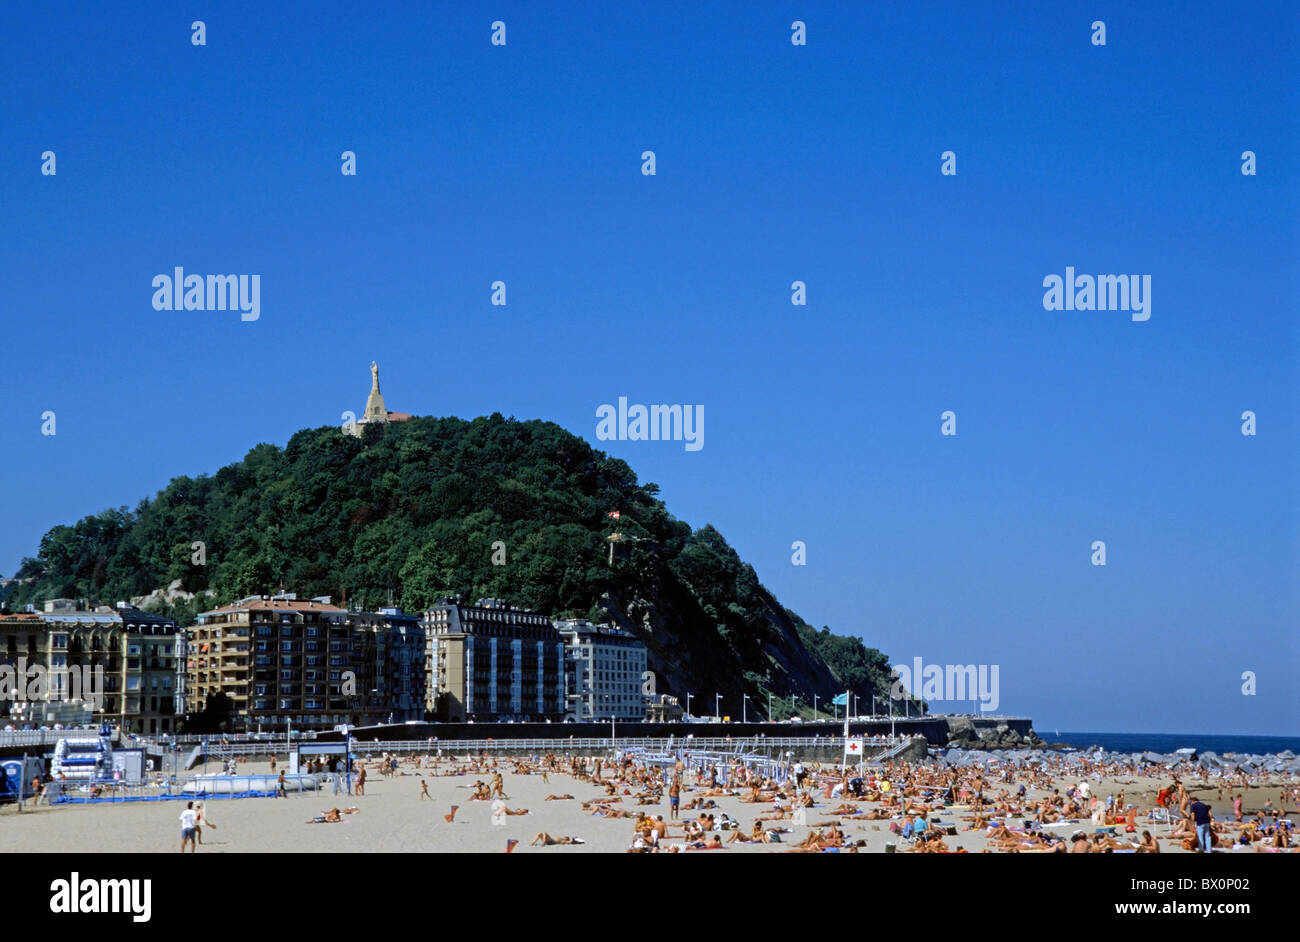 Crowded beach at San Sebastian / Donostia, Spain. Stock Photo